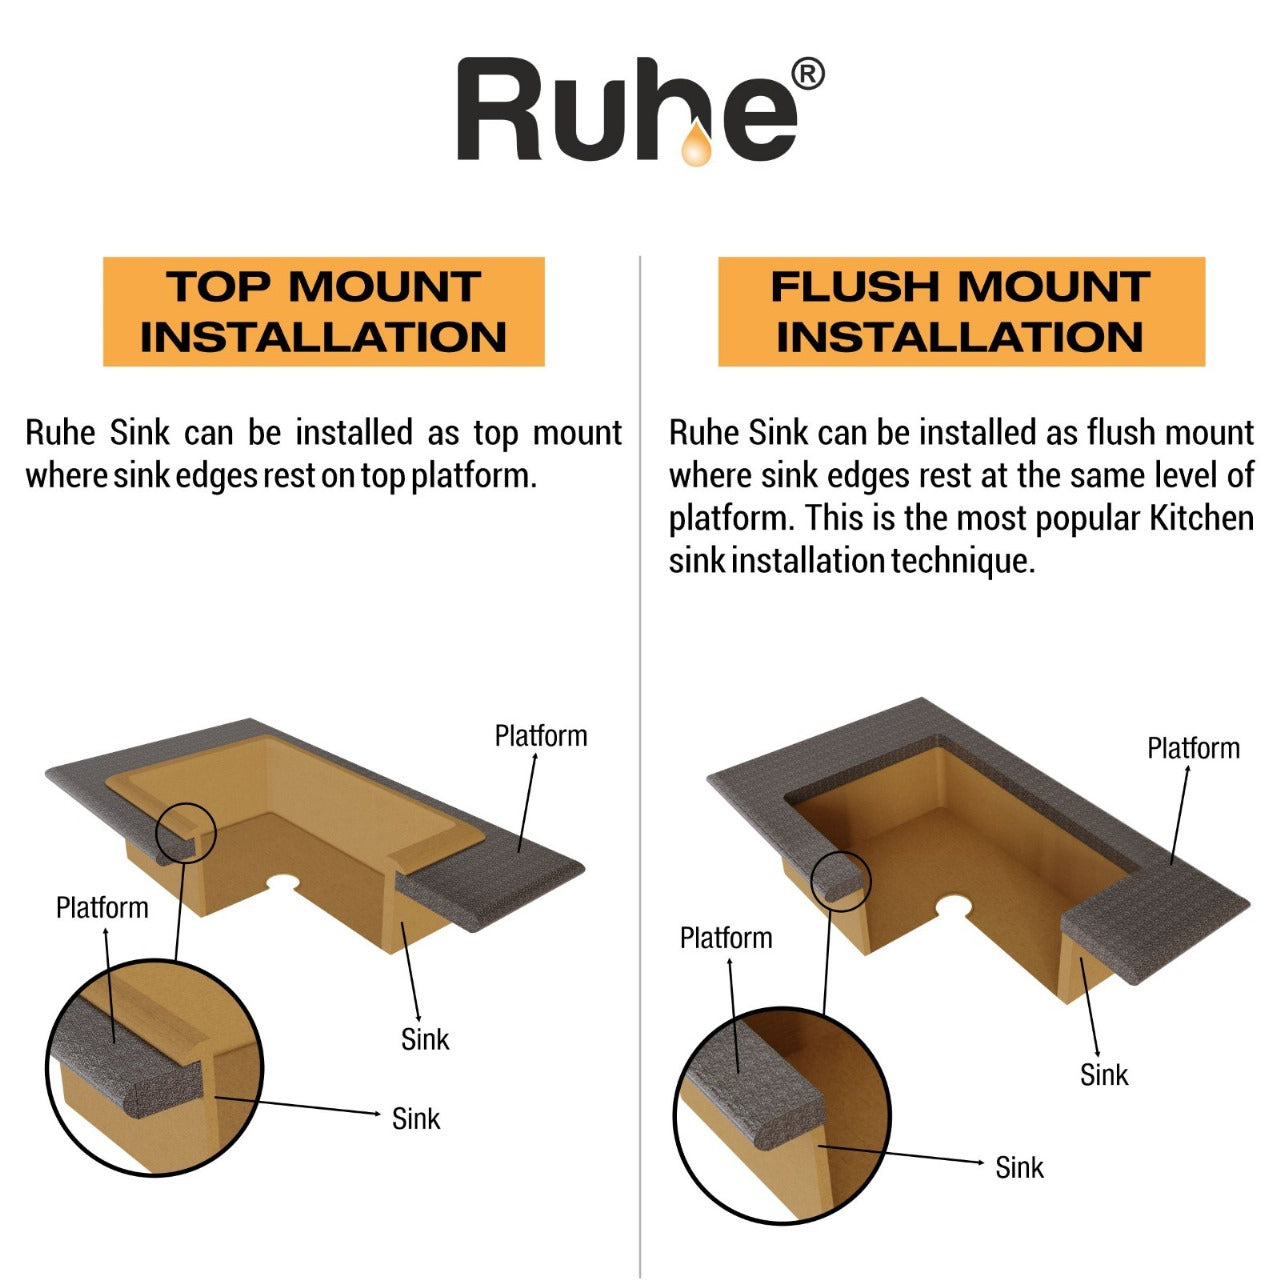 Quartz Double Bowl Kitchen Sink - Matte Black (37 x 18 x 9 inches) - by Ruhe®